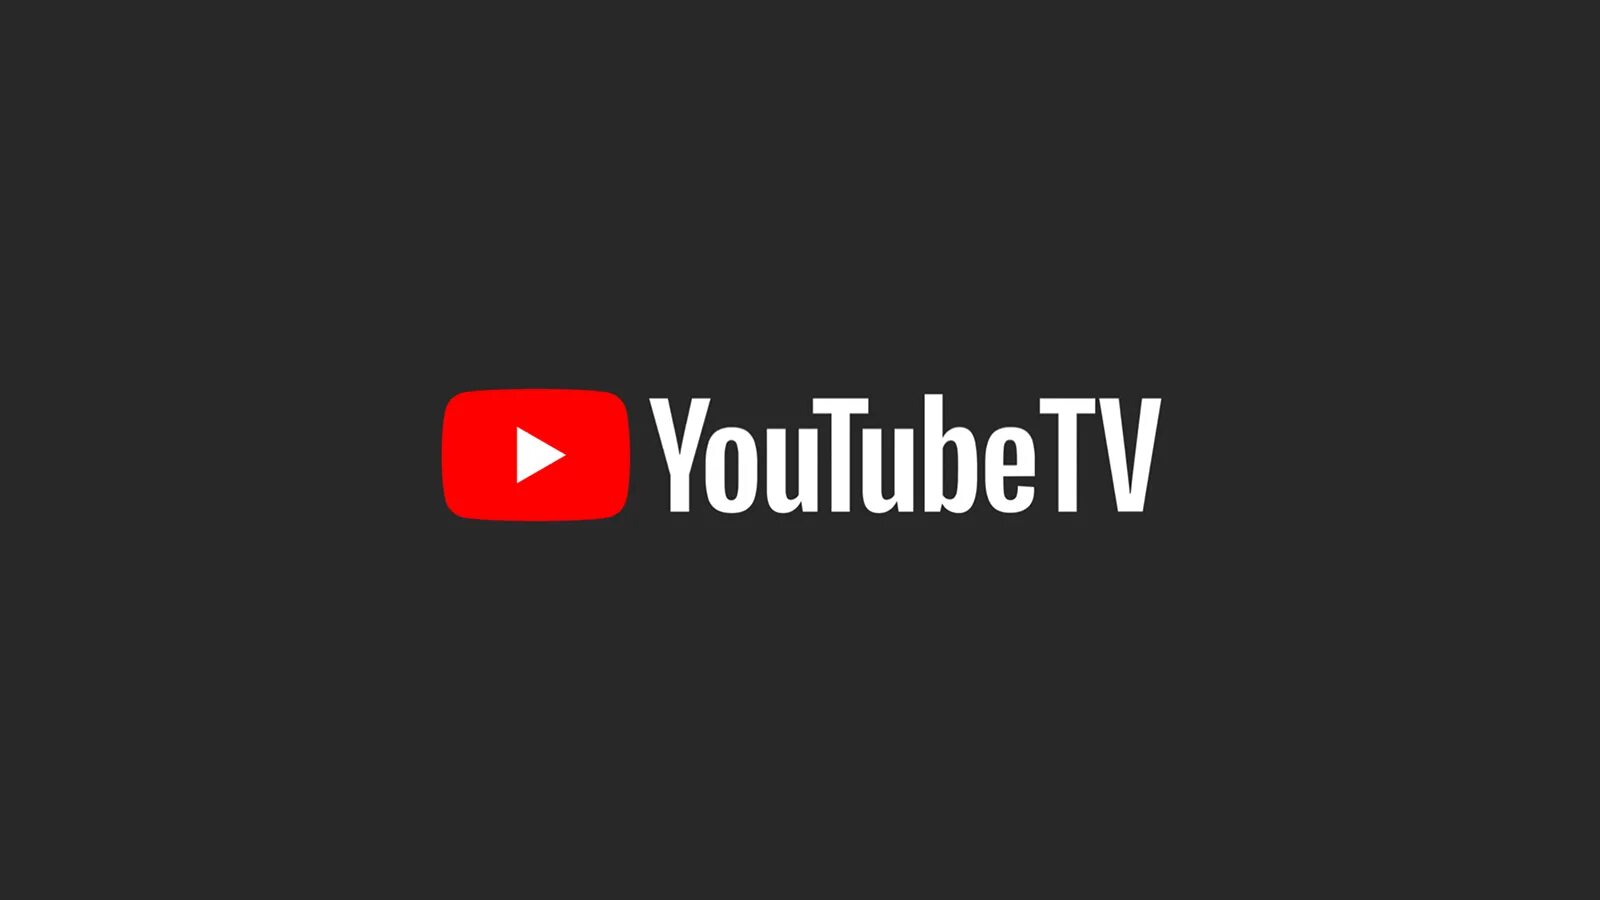 Ютуб. Логотип ютуб. Youtube Music логотип. Фото для ютуба. Значок ютуб на черном фоне.